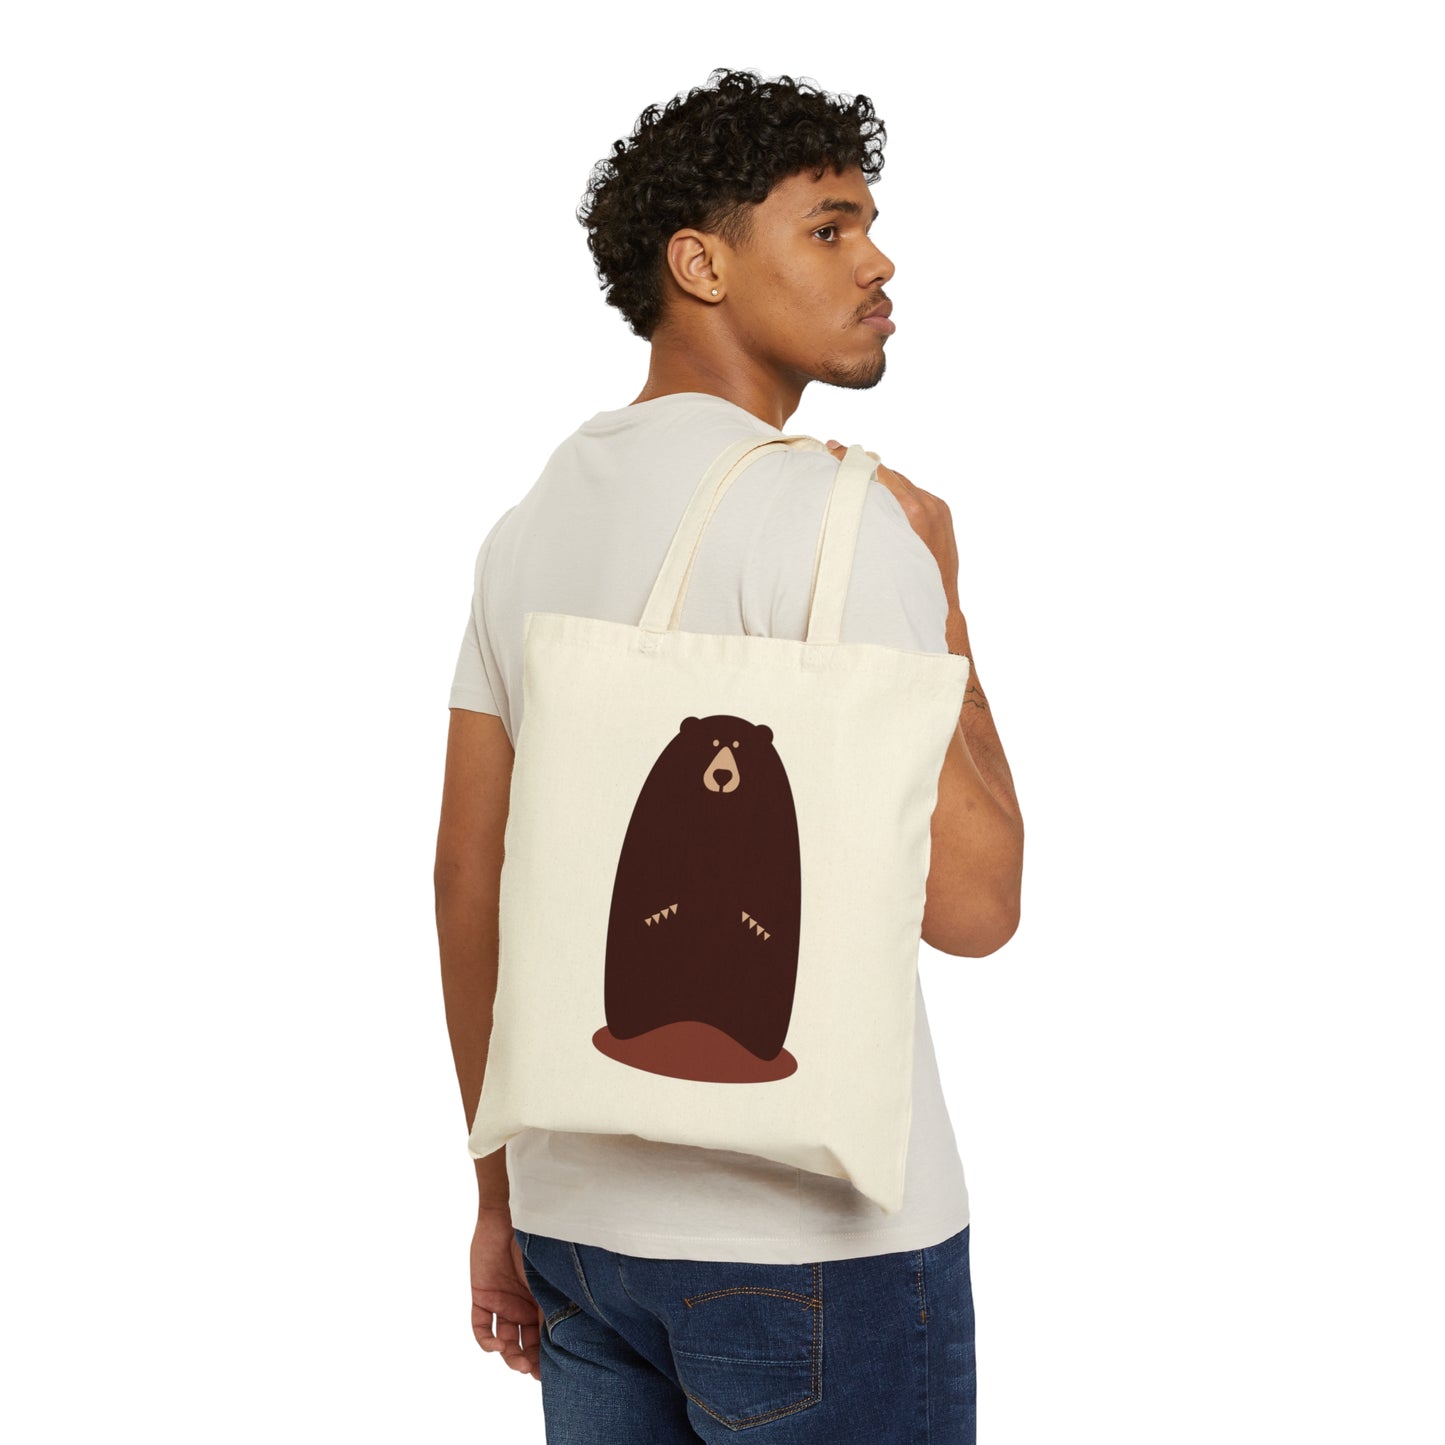 Bear Lovers Animals Anime Cartoon Canvas Shopping Cotton Tote Bag